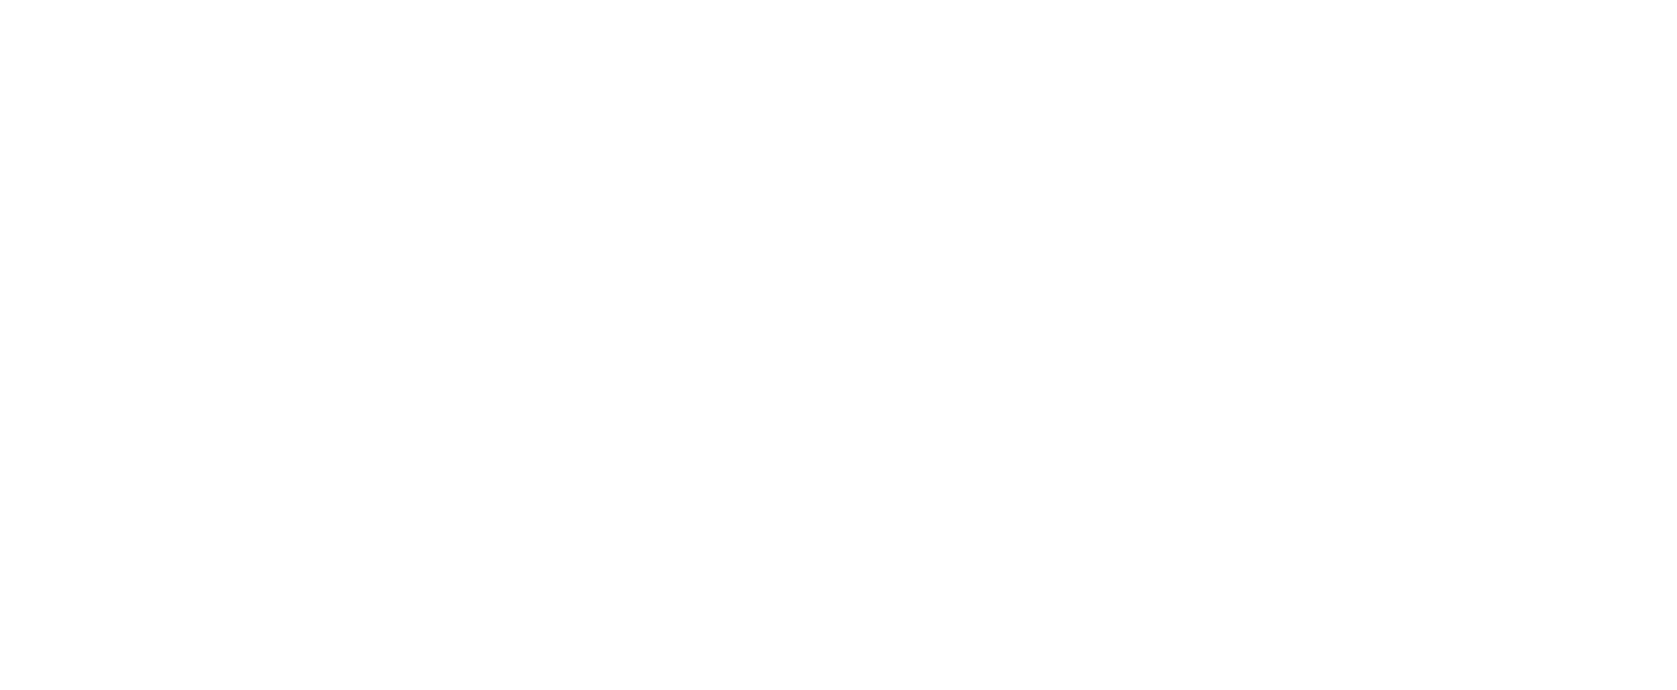 LifeStyleCamper